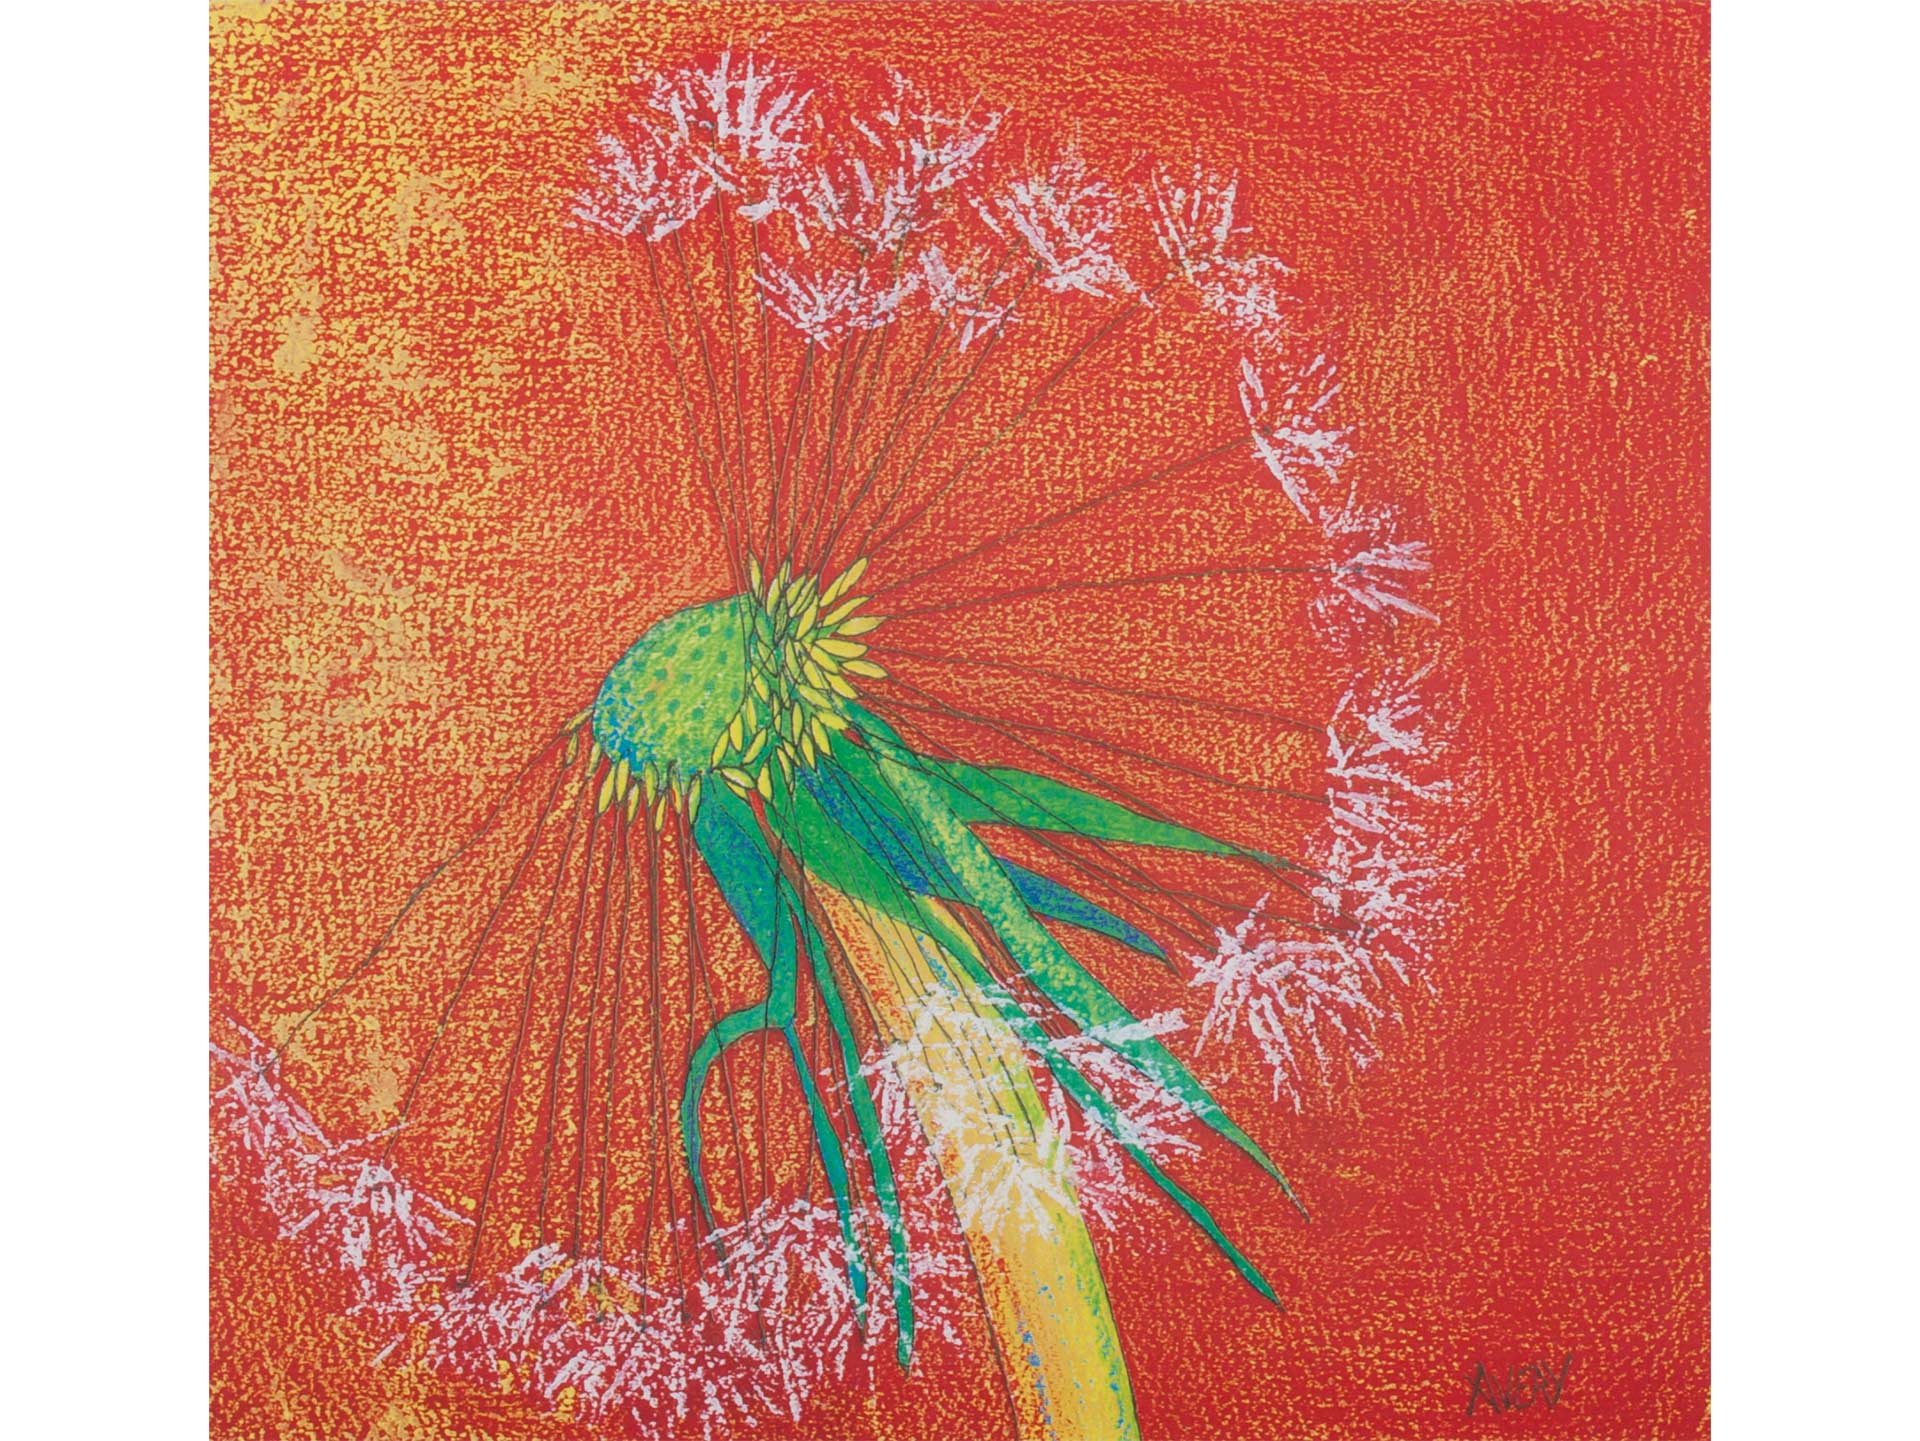 Lauren Avery Hutton | Dandelion Clock 2, orange, watercolor, 12x12, 2003